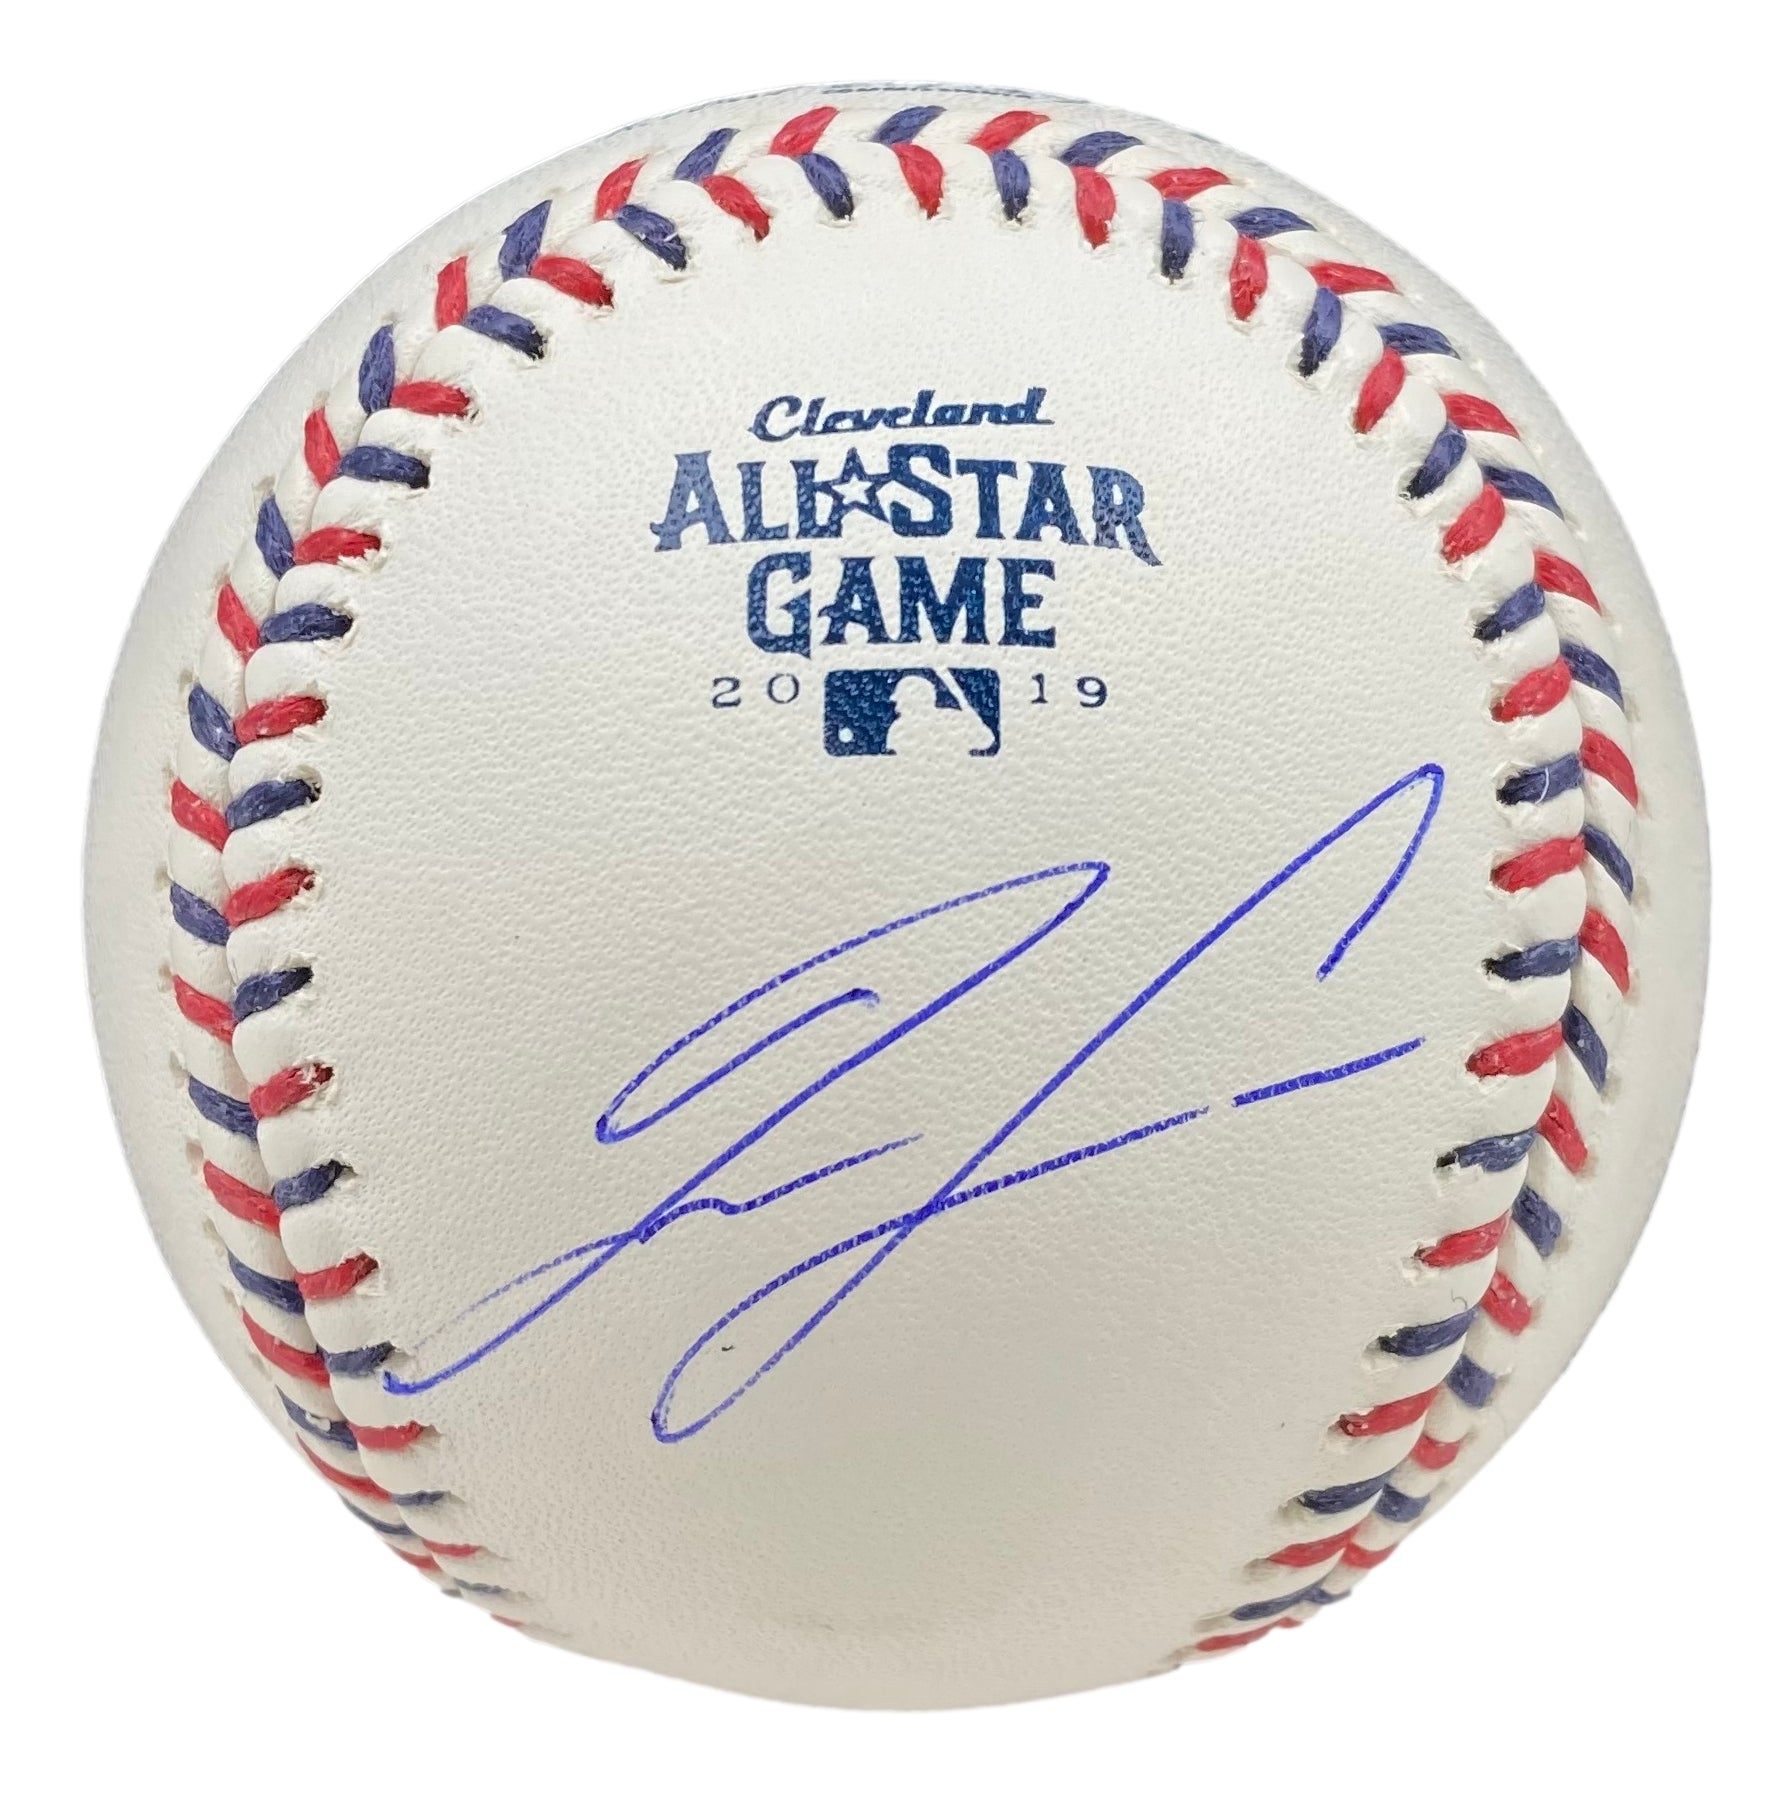 Autographed/Signed Ronald Acuna Jr. Atlanta White Baseball Jersey JSA COA  at 's Sports Collectibles Store